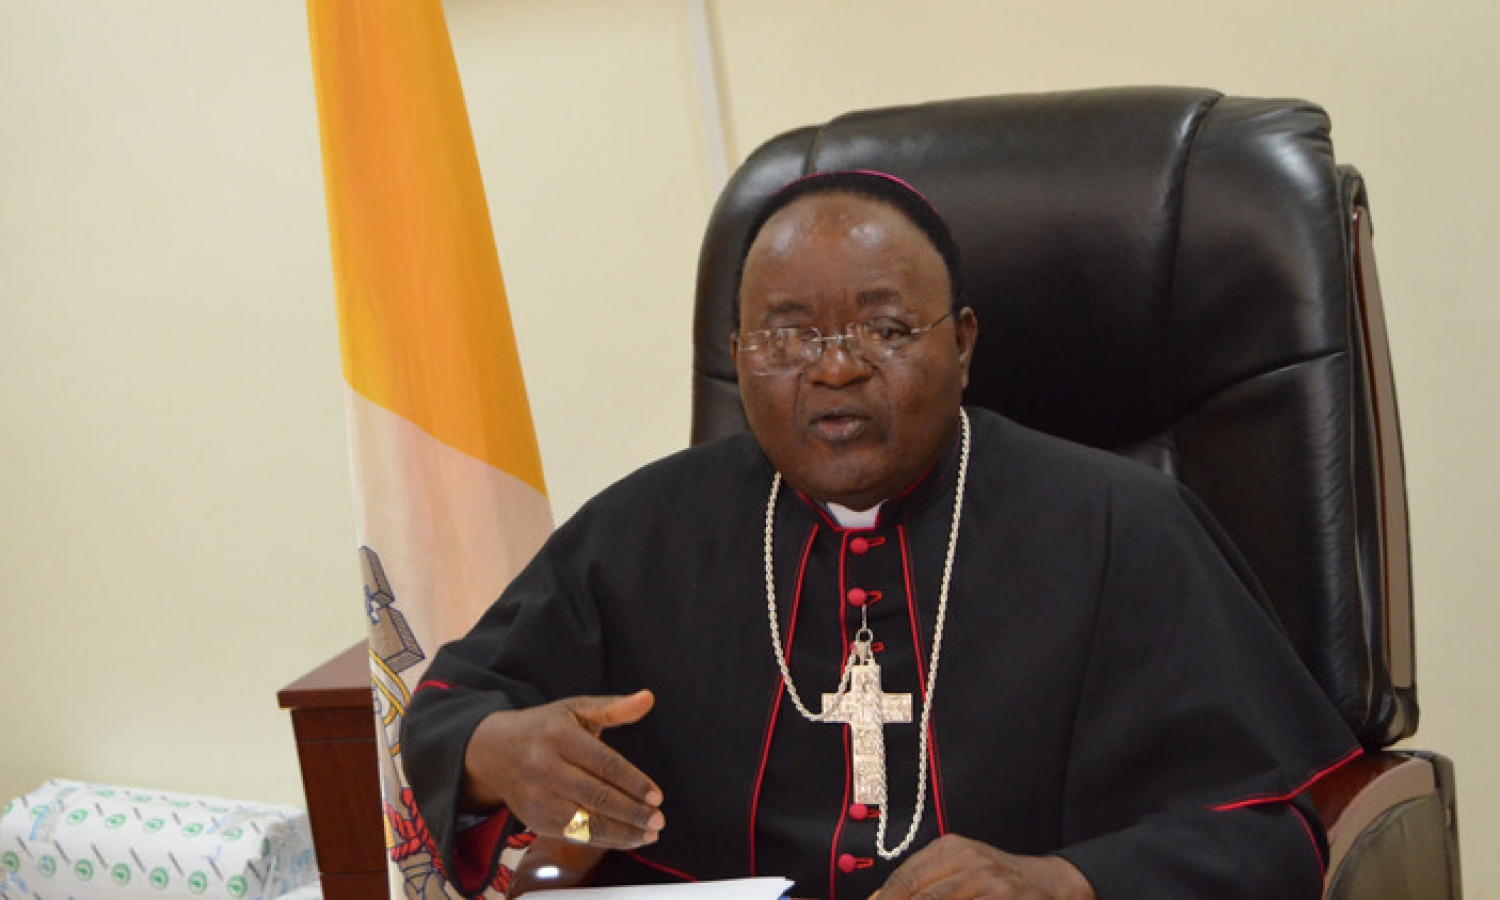 Archbishop Cyprian Kizito Lwanga was pronounced dead on 3rd of April